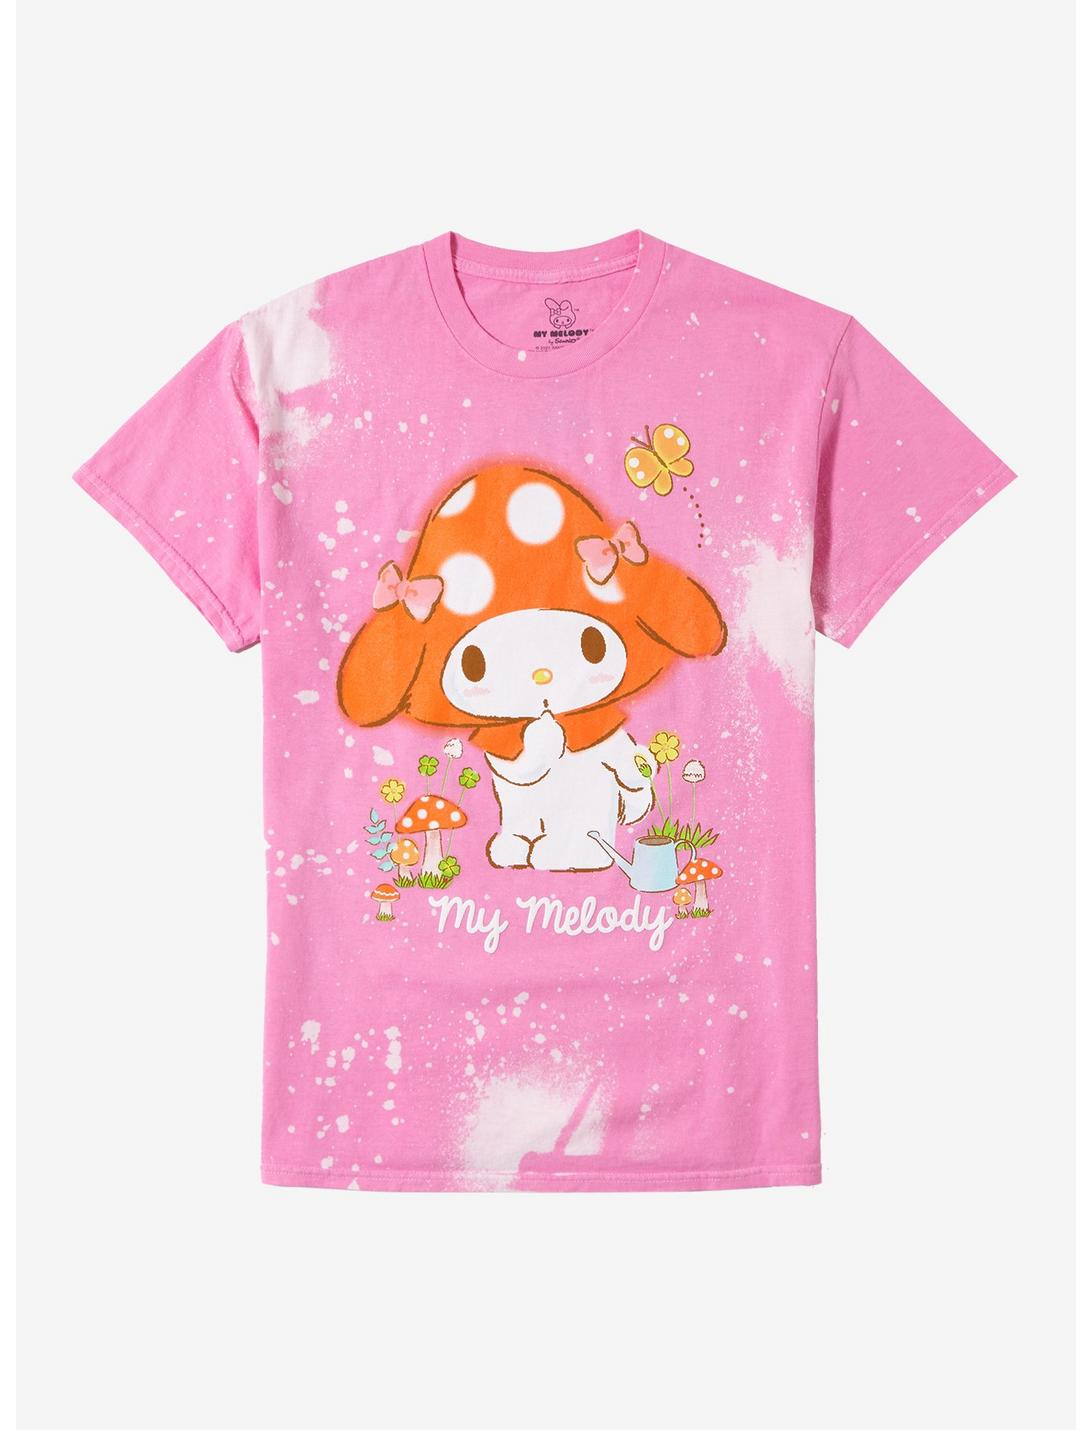 My Melody Mushroom Pink Splatter Dye Boyfriend Fit Girls T-Shirt, MULTI, hi-res